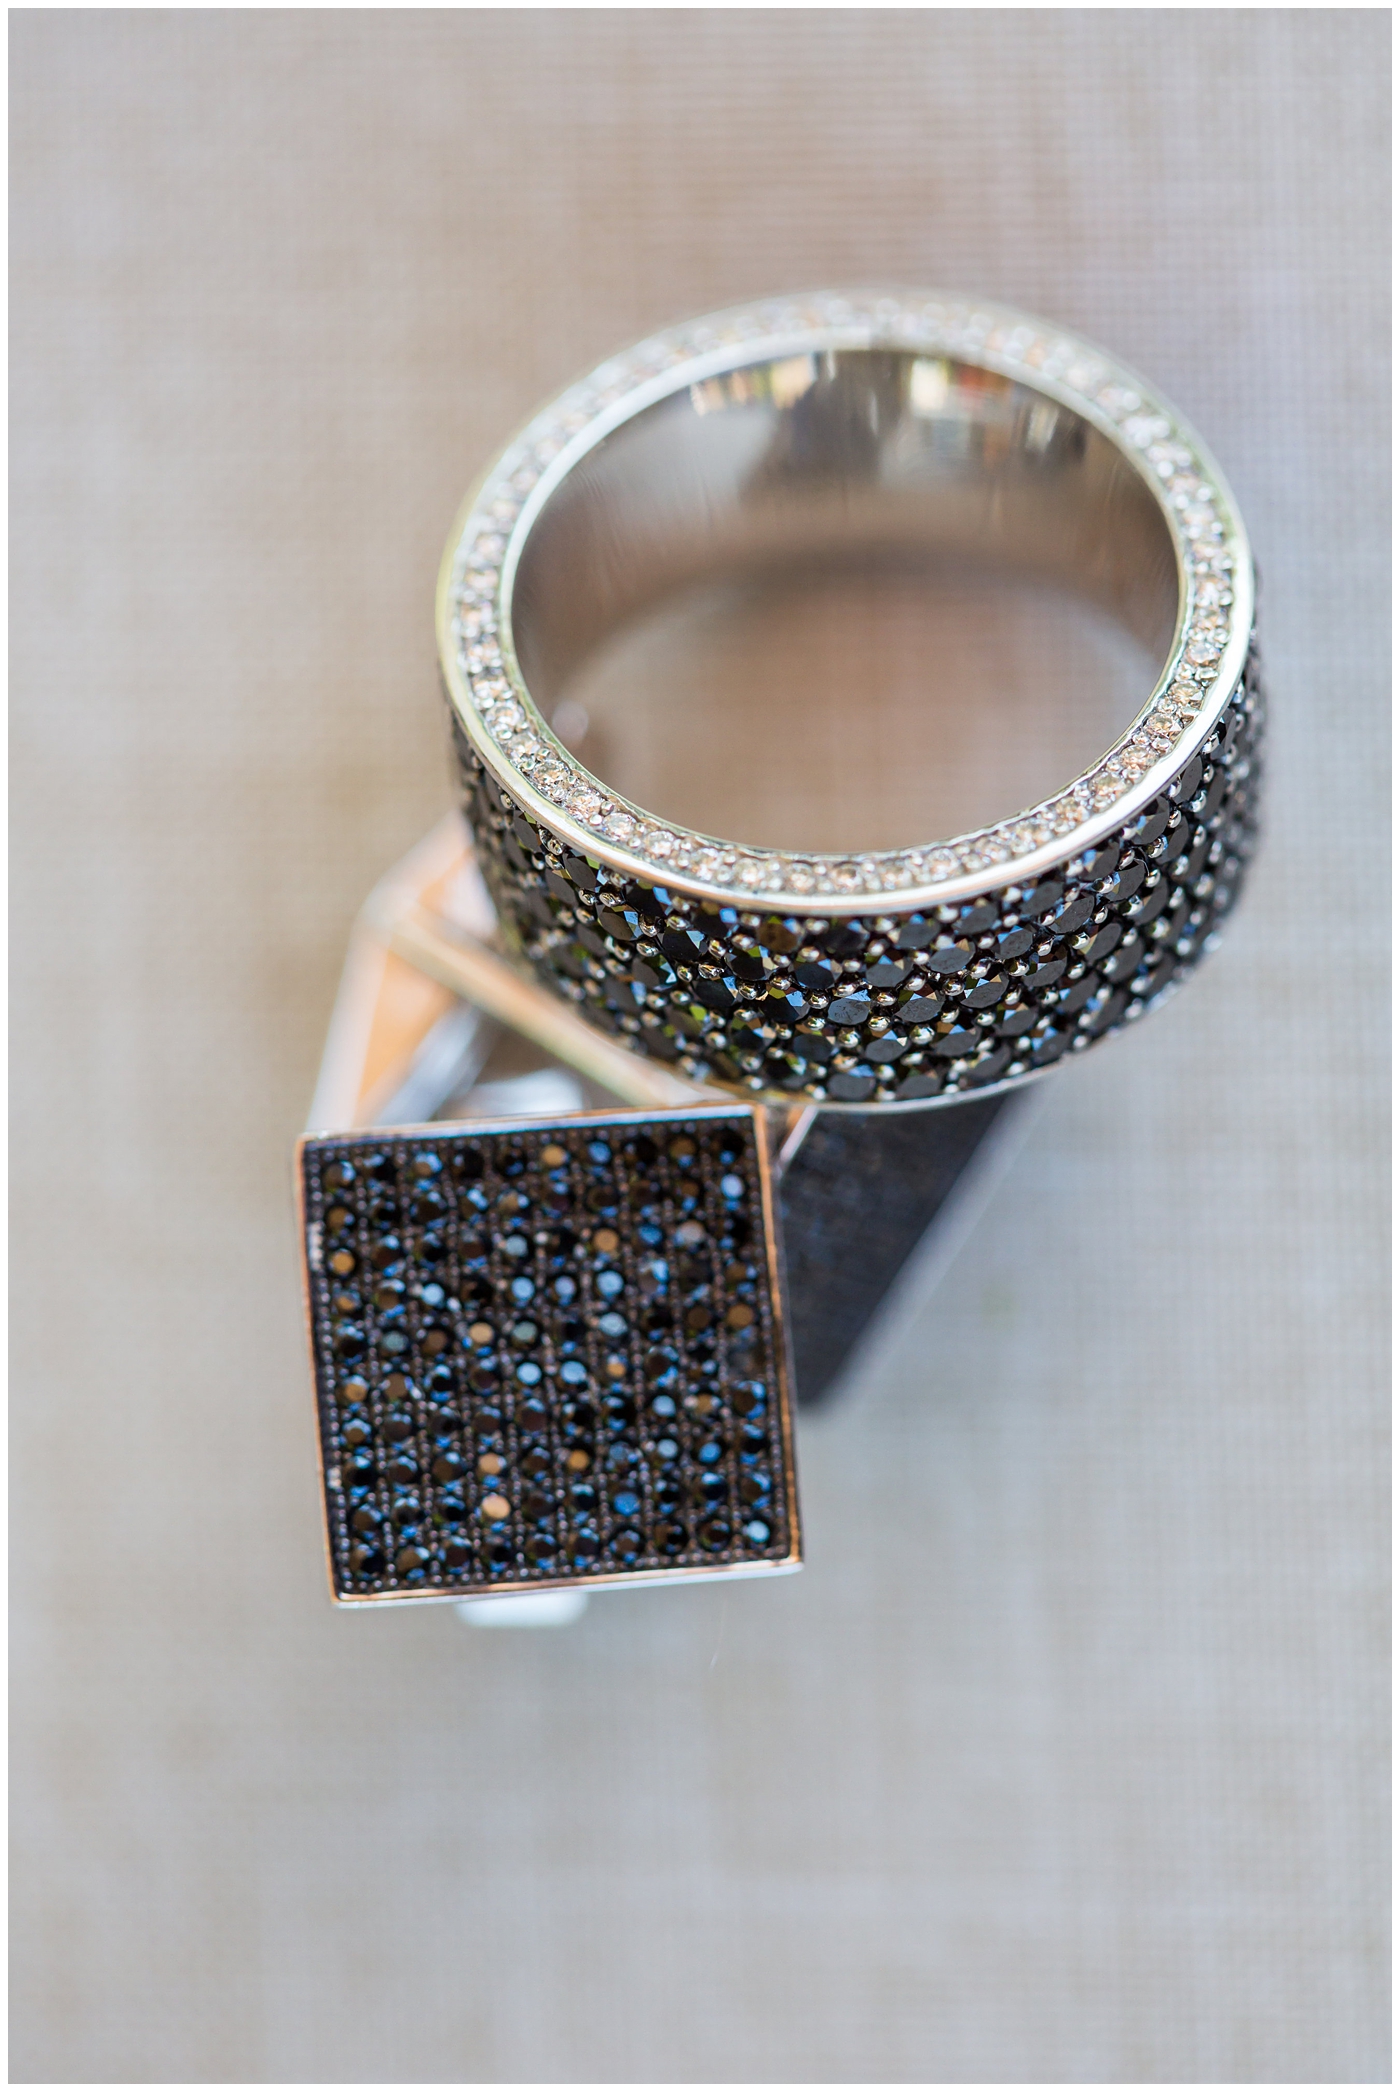 groom diamond ring with dark diamonds all around and matching cufflinks for wedding day